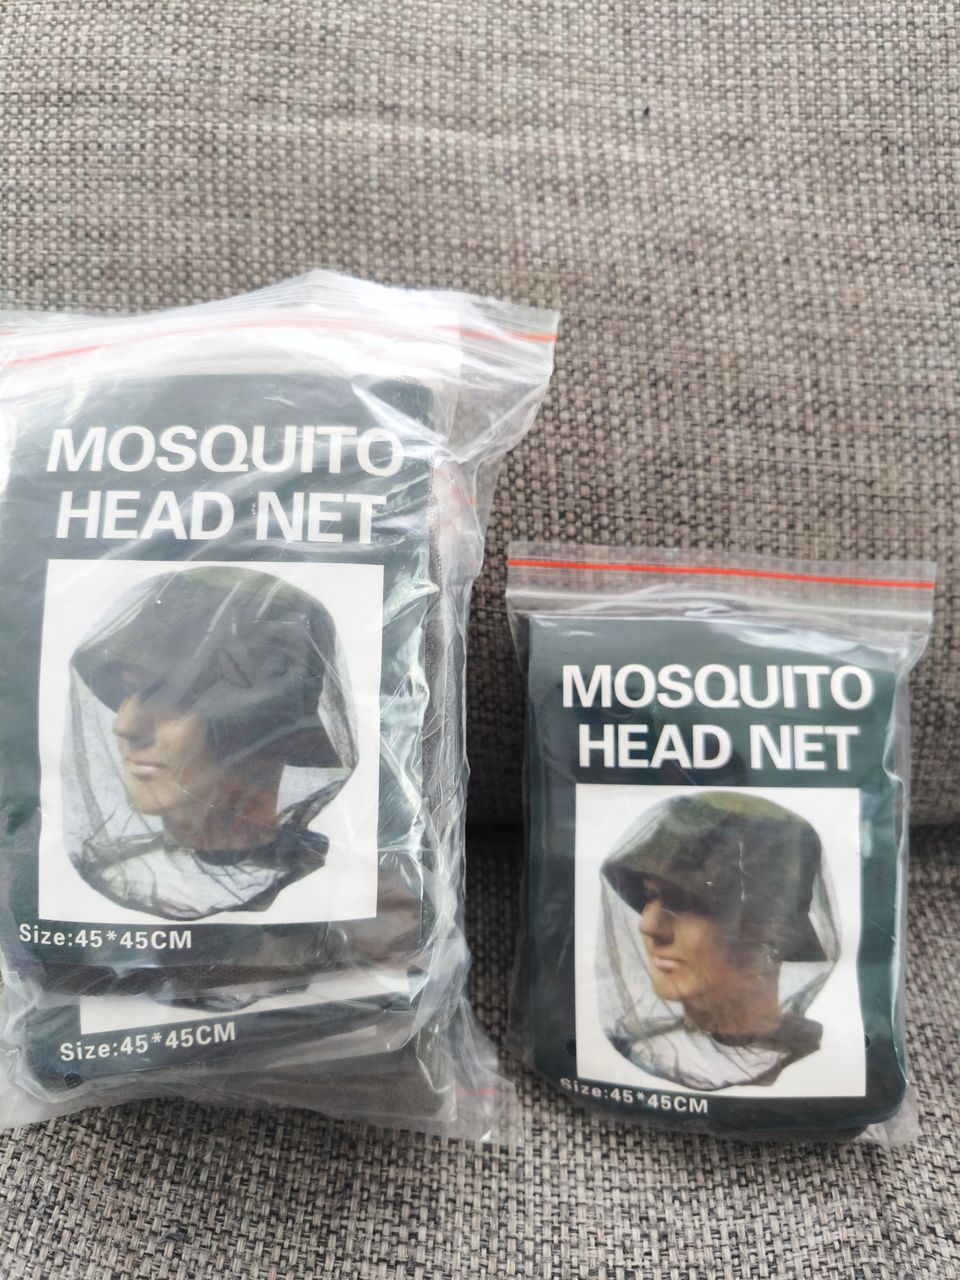 🦟 mosquito 🤠 hat . One mosquito 1 euro.